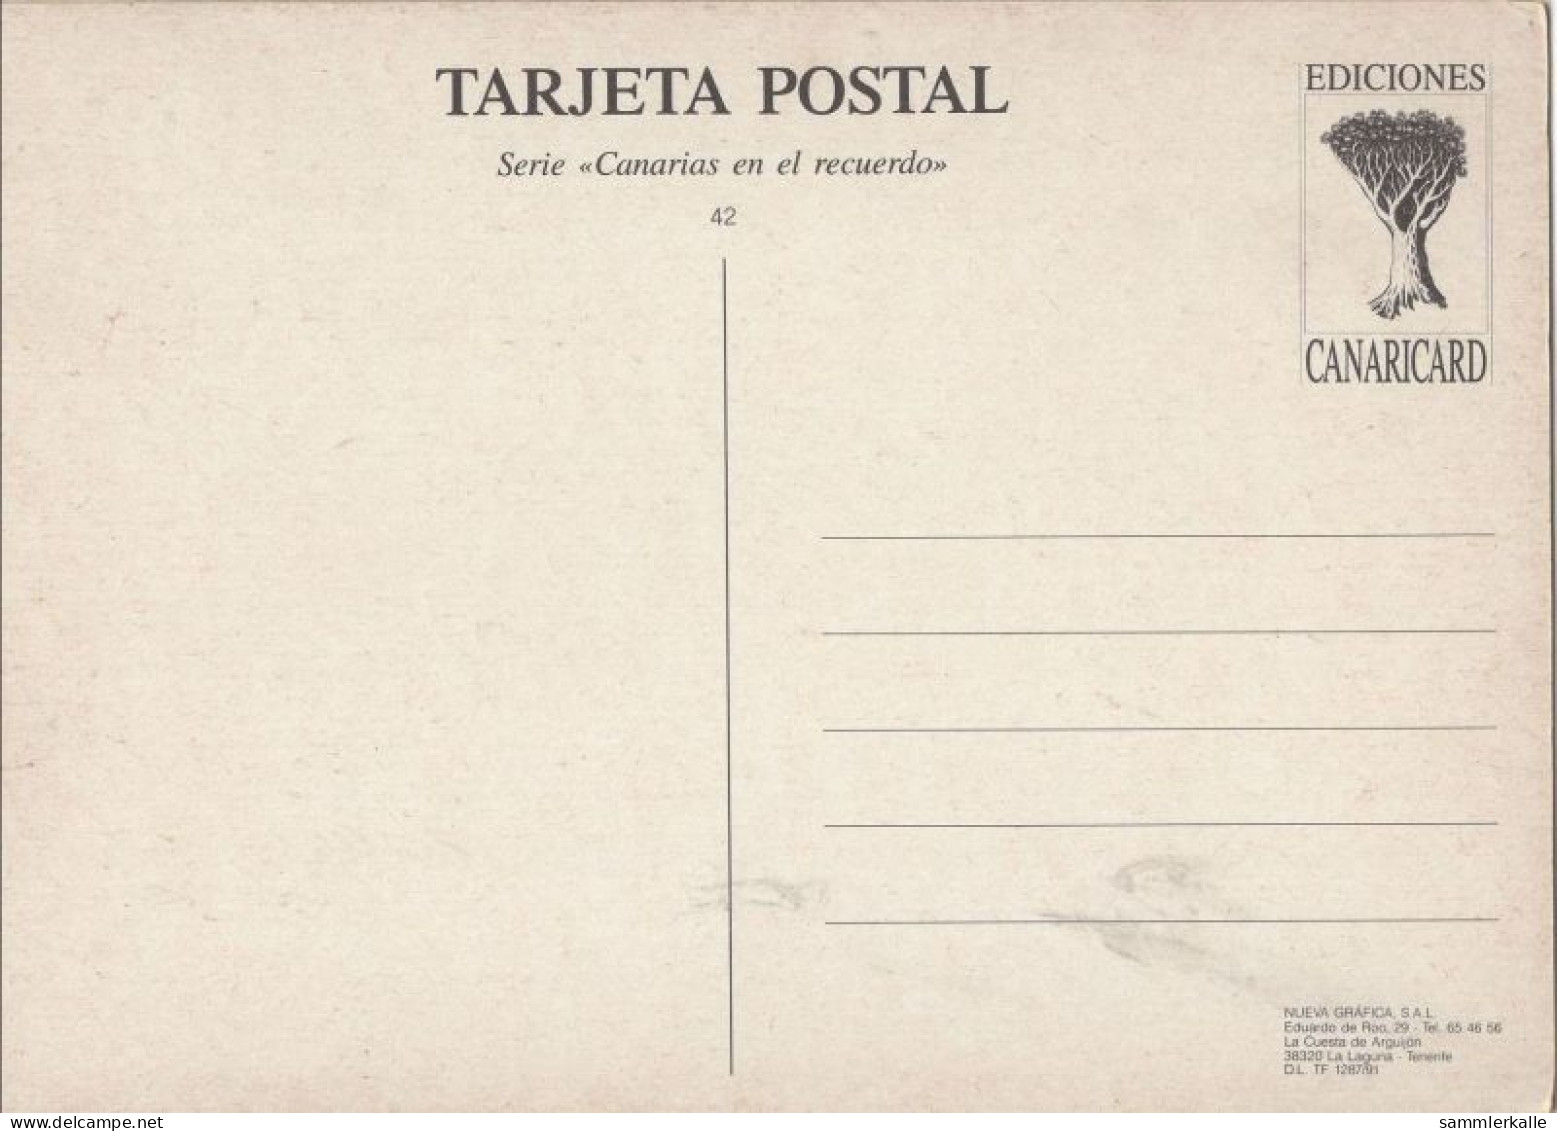 133336 - Teneriffa - Spanien - Plaza De La Constitucion [Reprint] - Tenerife